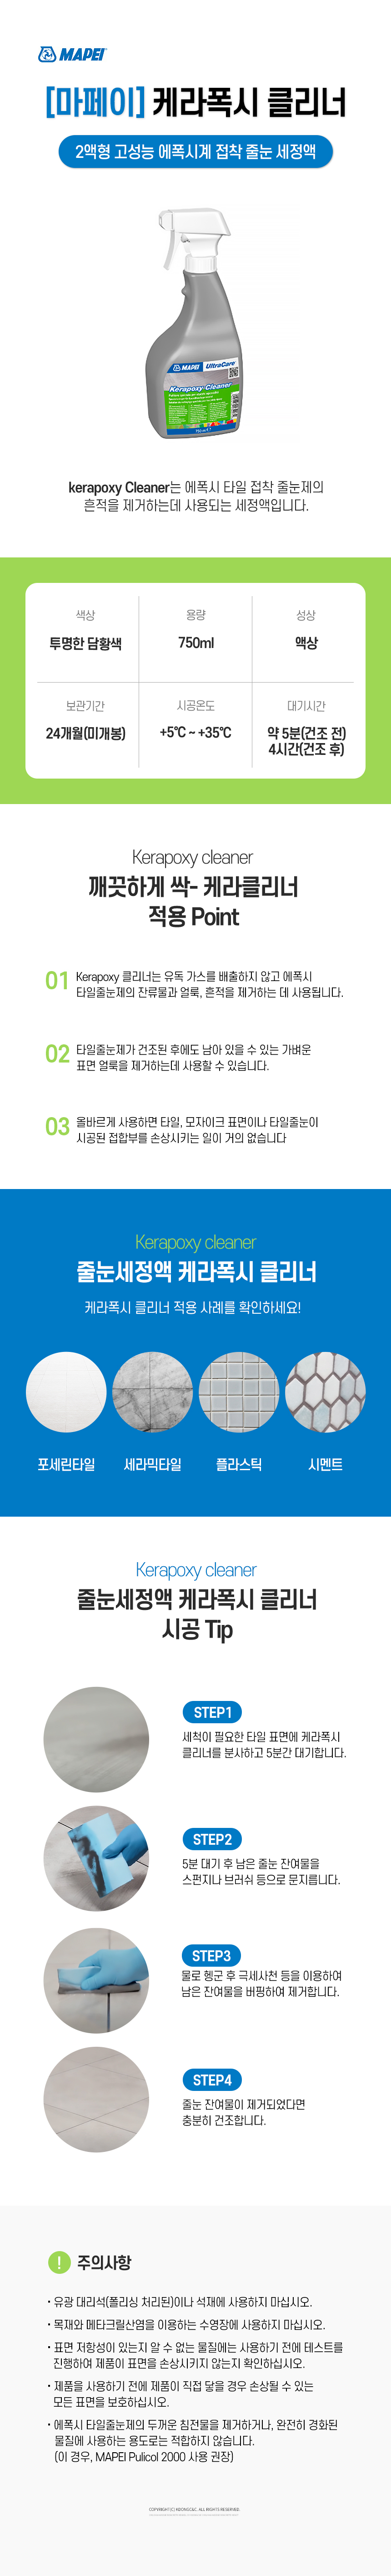 kerapoxy_Cleaner_860.jpg